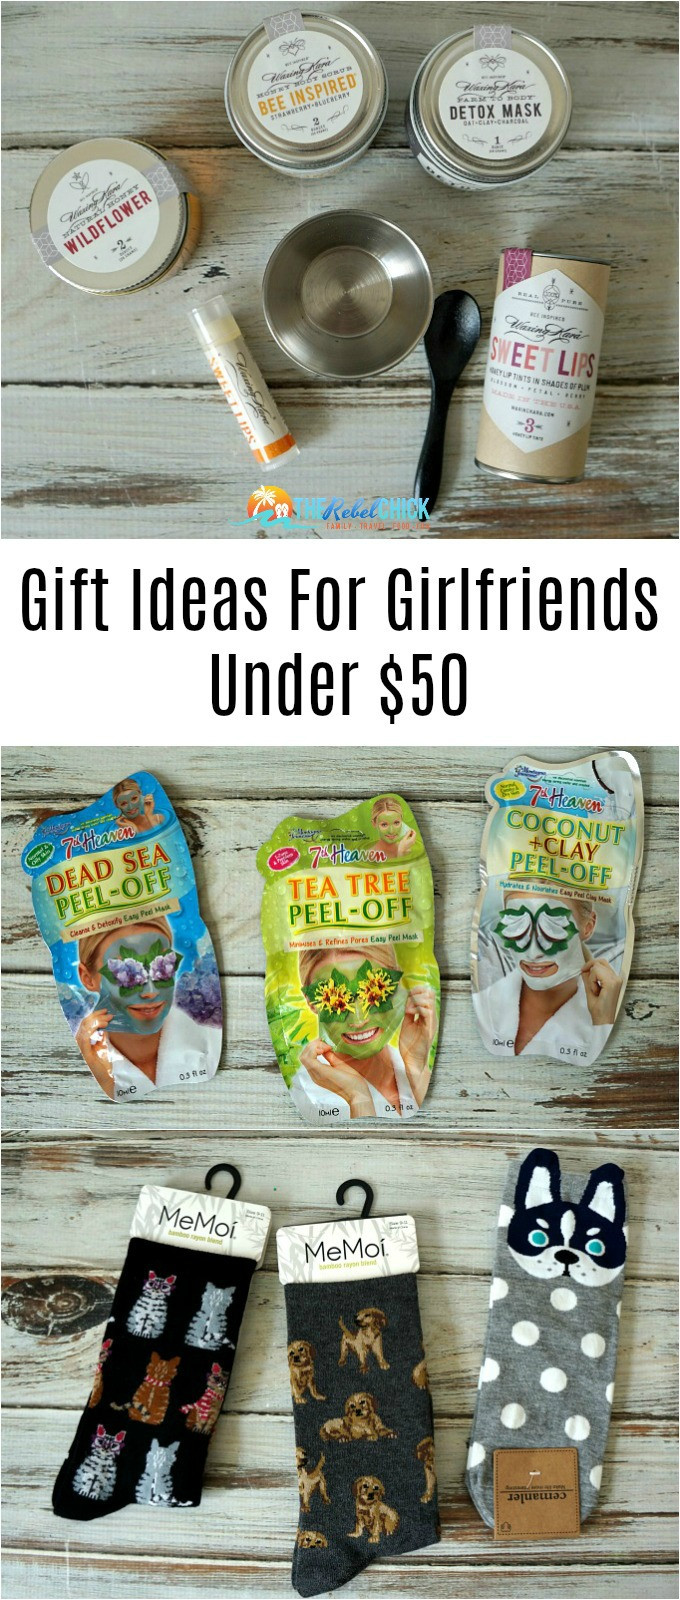 Girlfriend Gift Ideas Under $50
 Gift Ideas For Girlfriends Under $50 The Rebel Chick